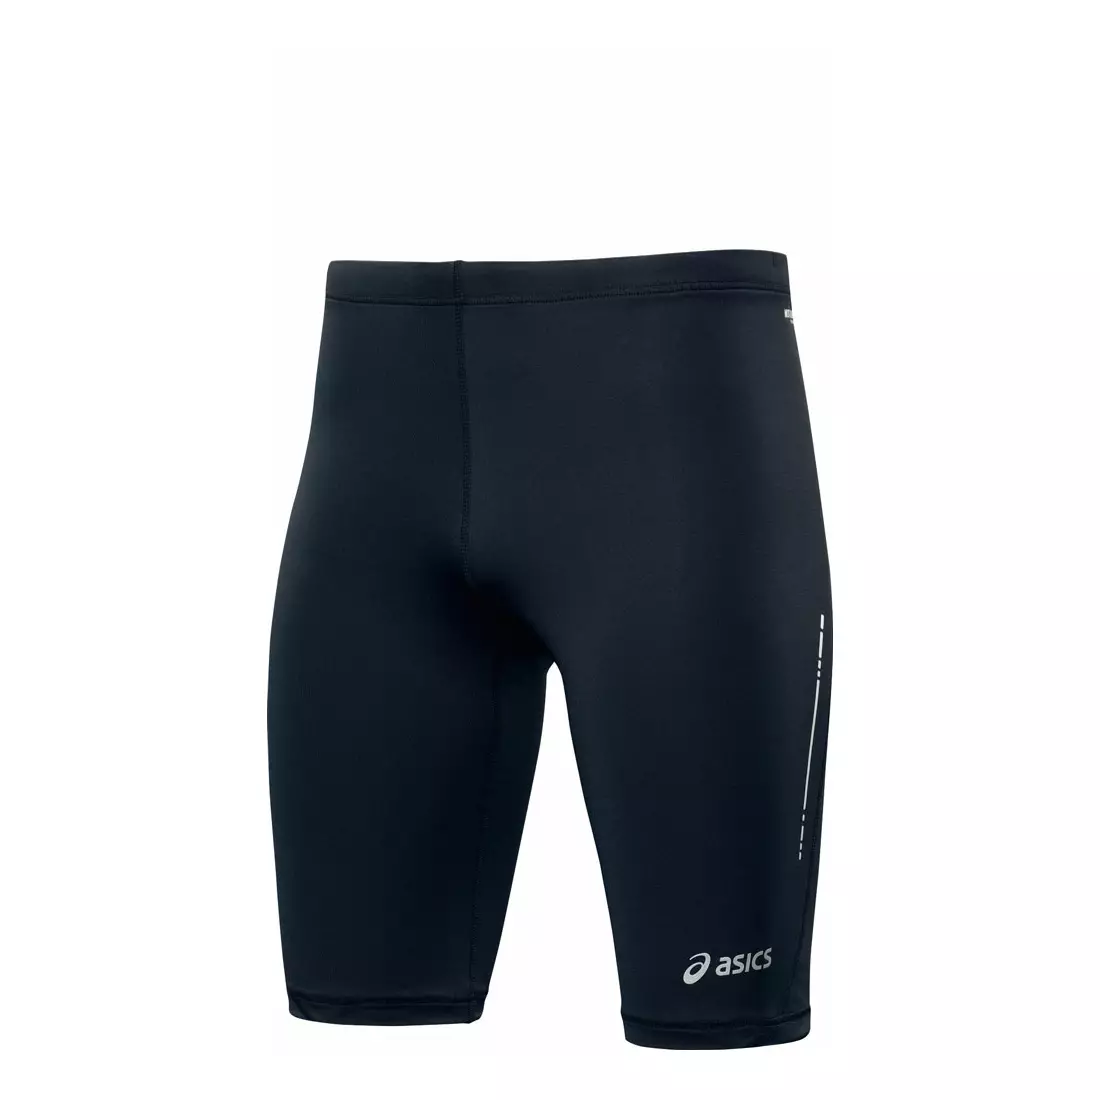 ASICS 110415-0904 - men's SPRINTER shorts, color: black